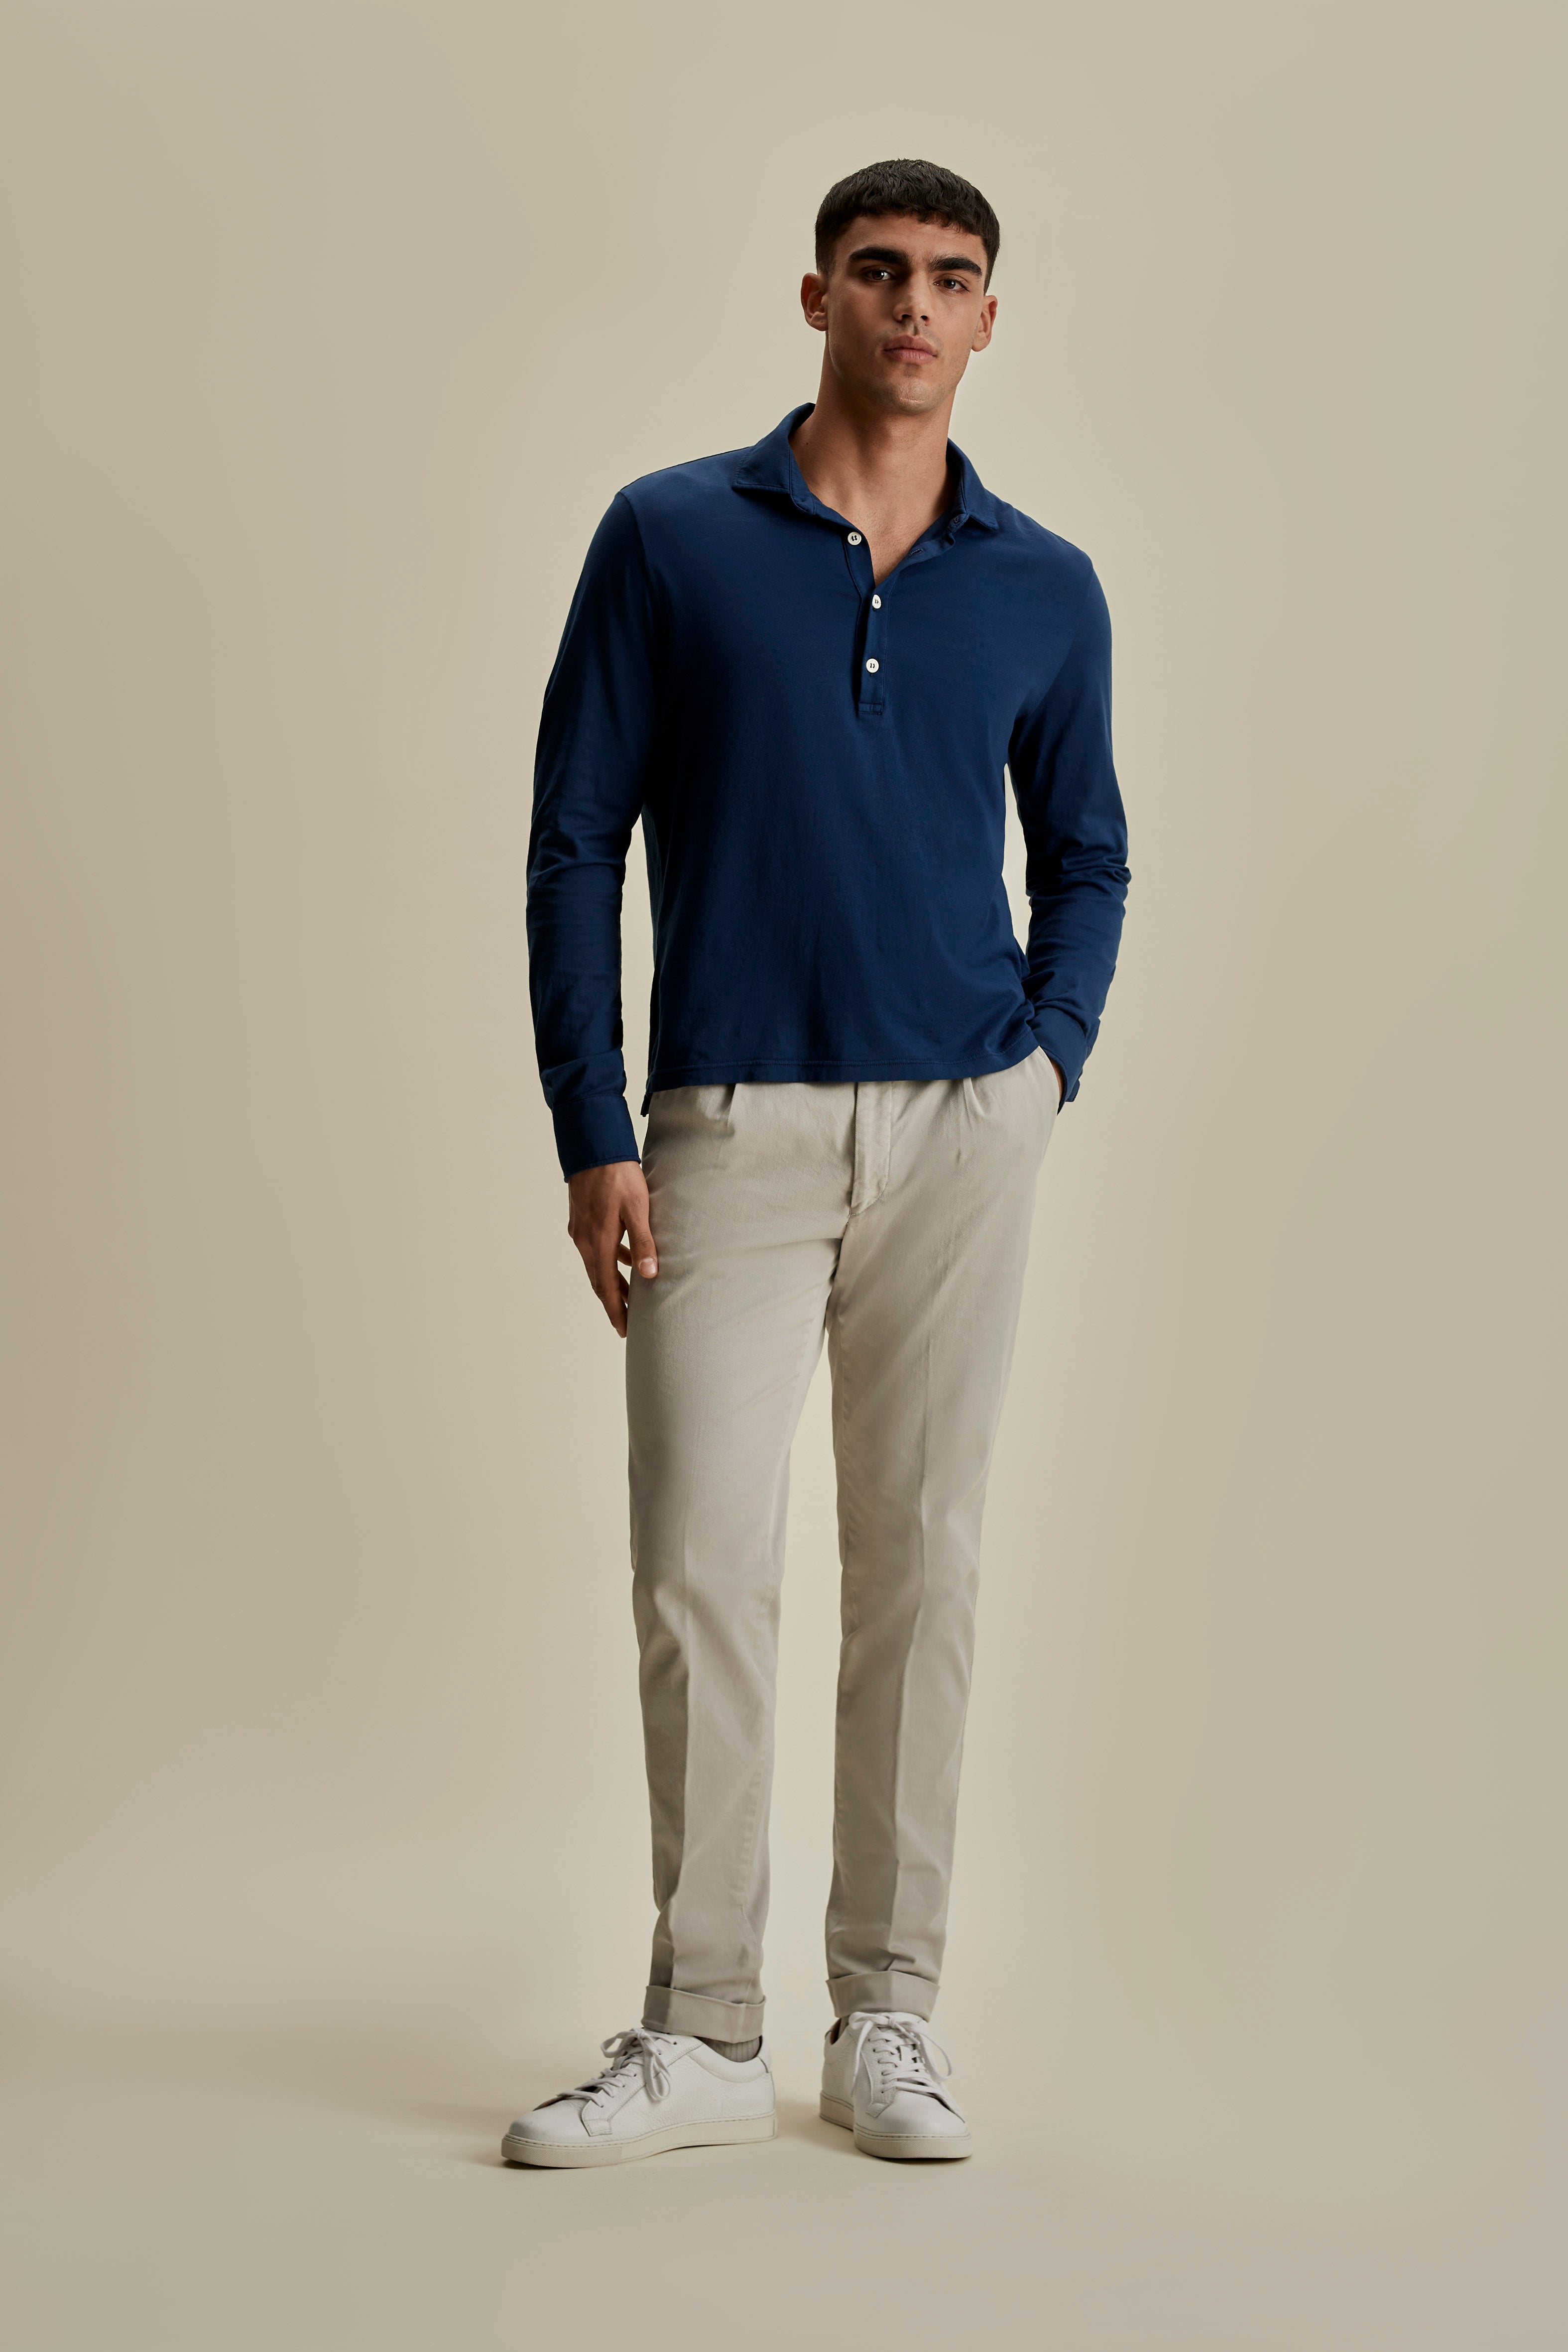 Cotton Long Sleeve Polo Shirt Navy Full Length Model Image